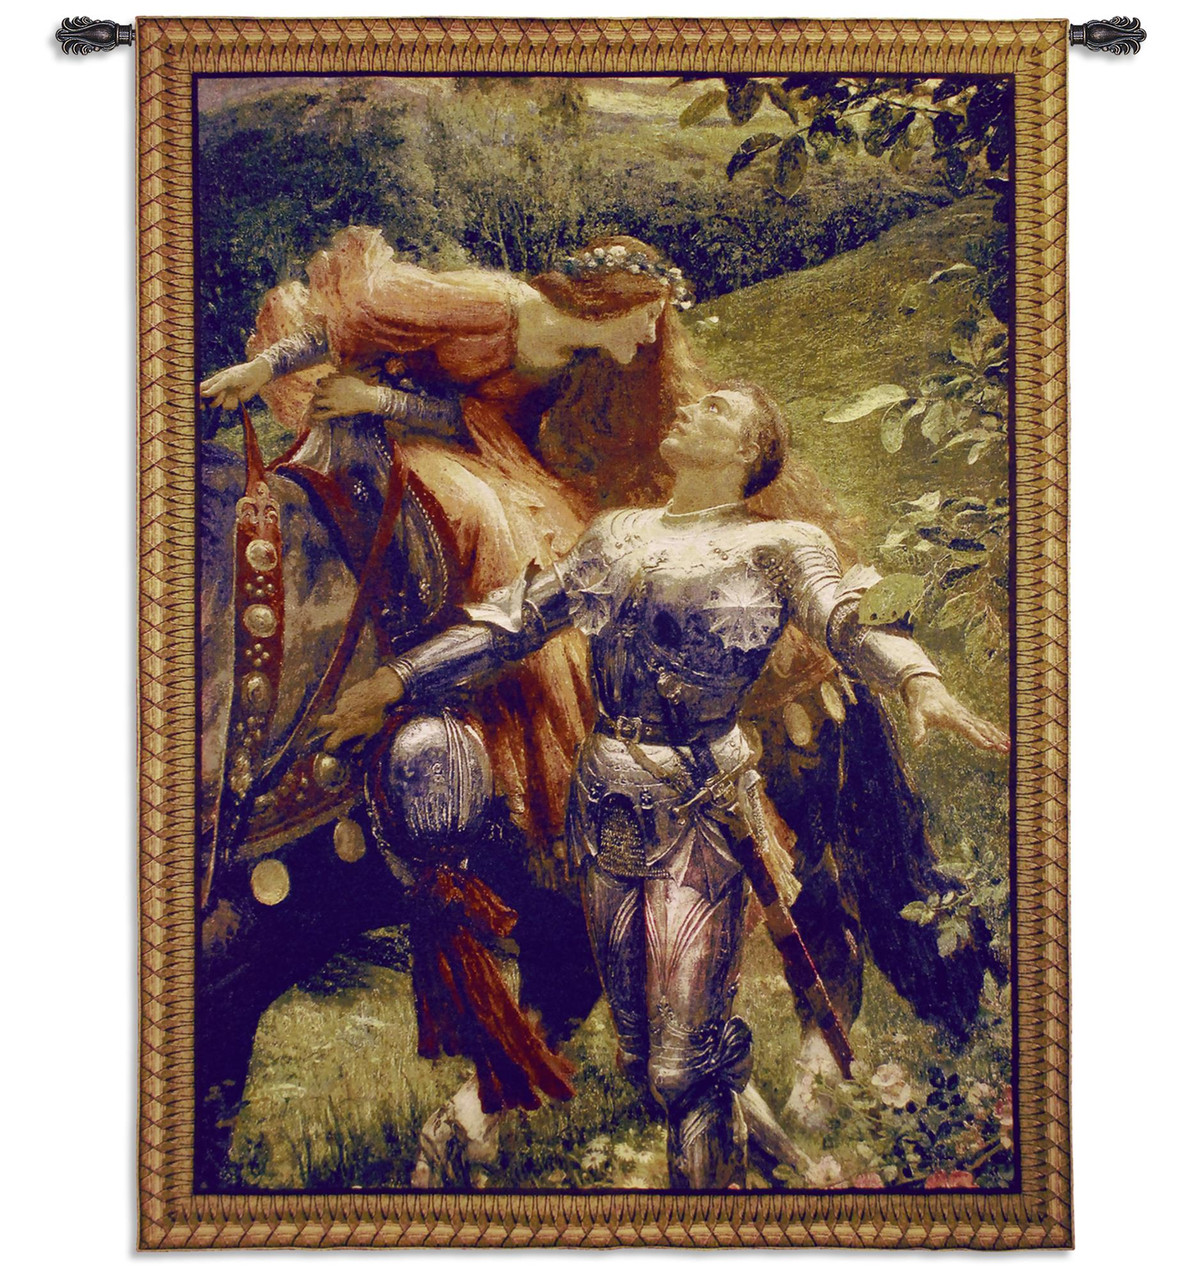 La Belle Dame sans Merci by Frank Dicksee Woven Tapestry Wall Art Hanging  Victorian John Keats Poem Depiction 100% Cotton USA Size 69x53